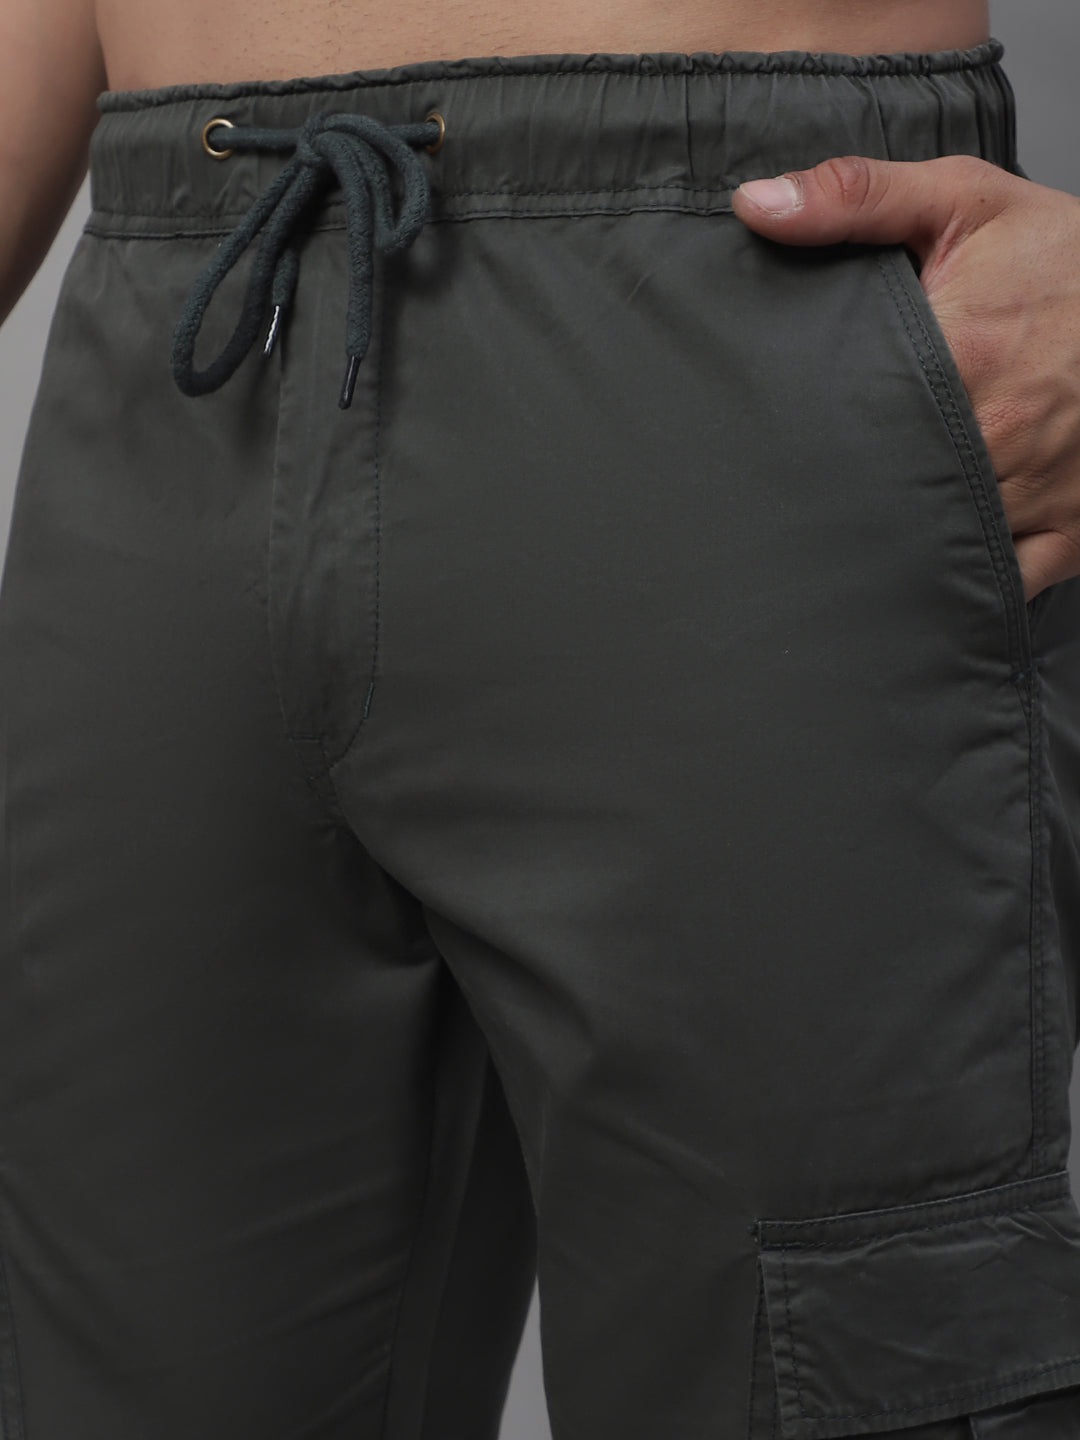 JMIERR Mens Casual Cotton Linen Pants Elastic Drawstring Loose Fit Trousers  Lightweight Summer Beach Yoga Pants X-Large 0grey